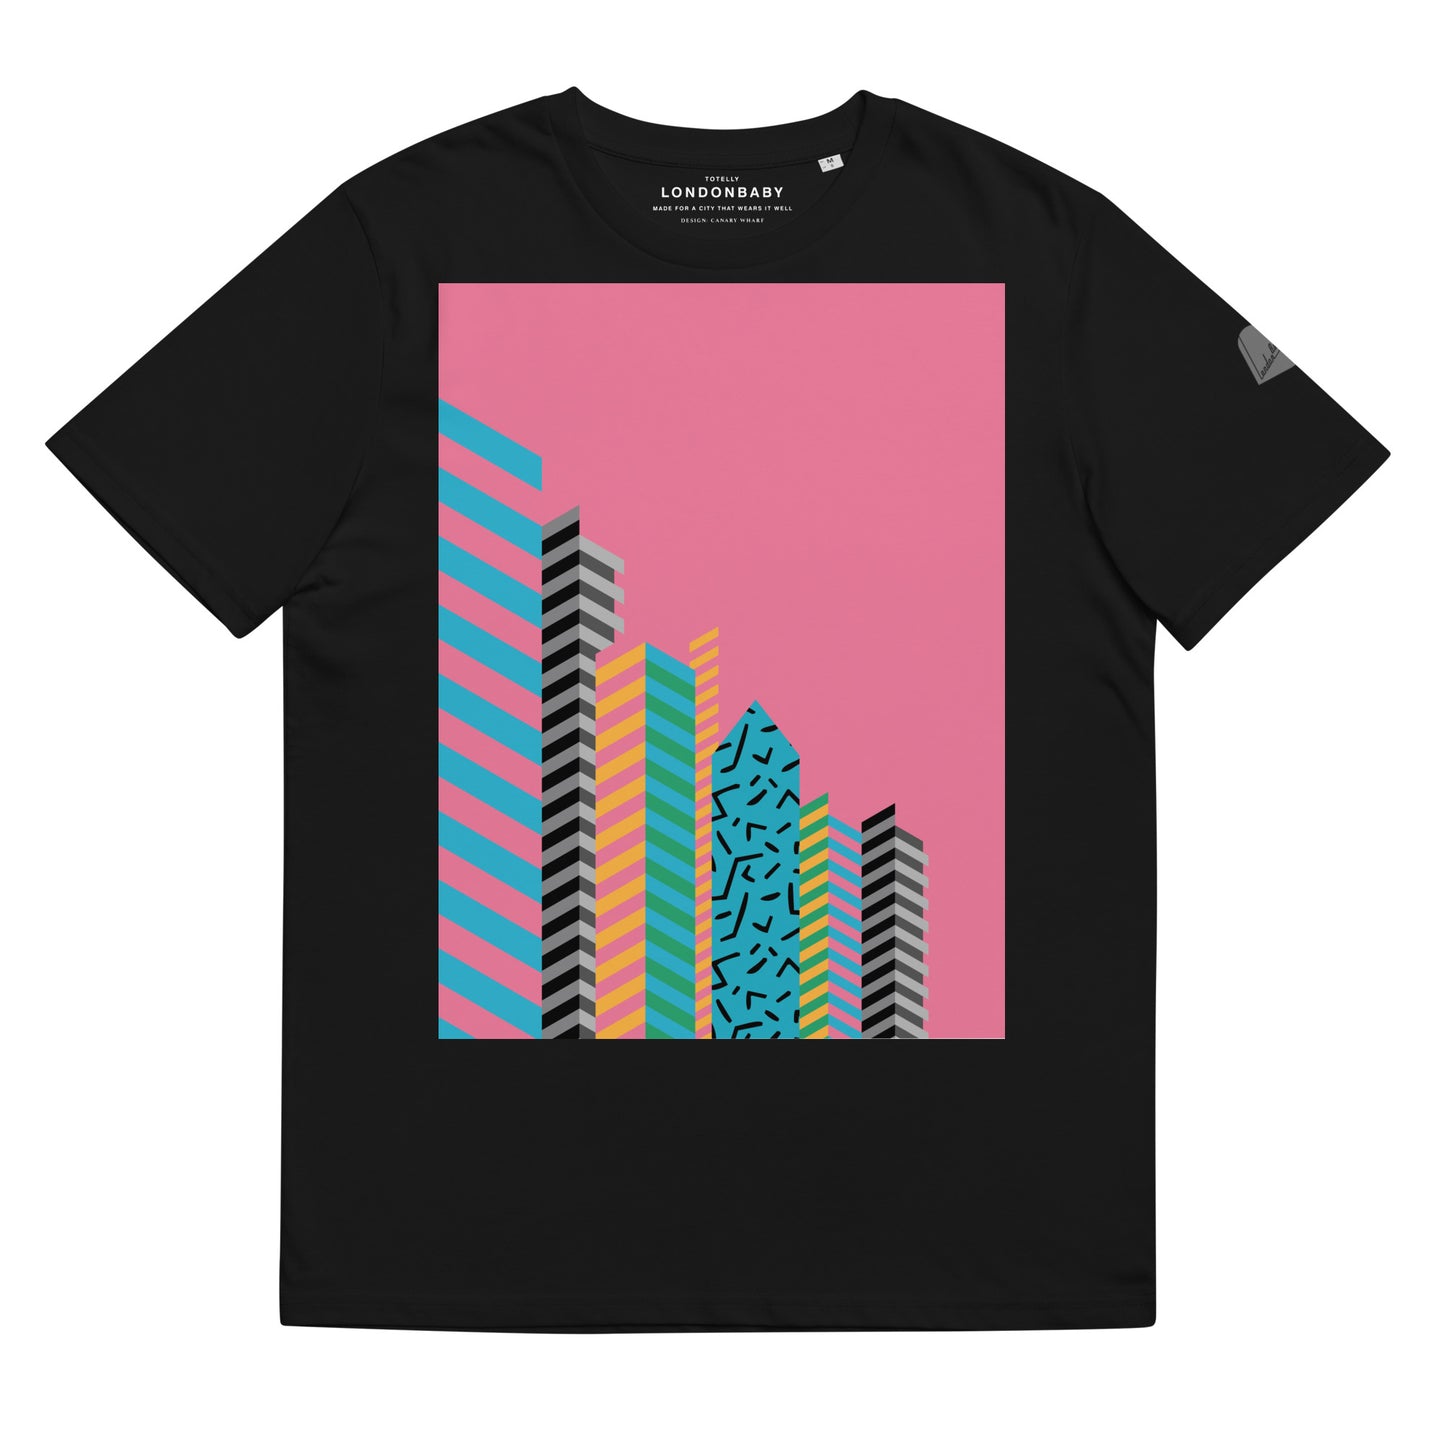 LondonBaby Canary Wharf - Panel Design T-shirt